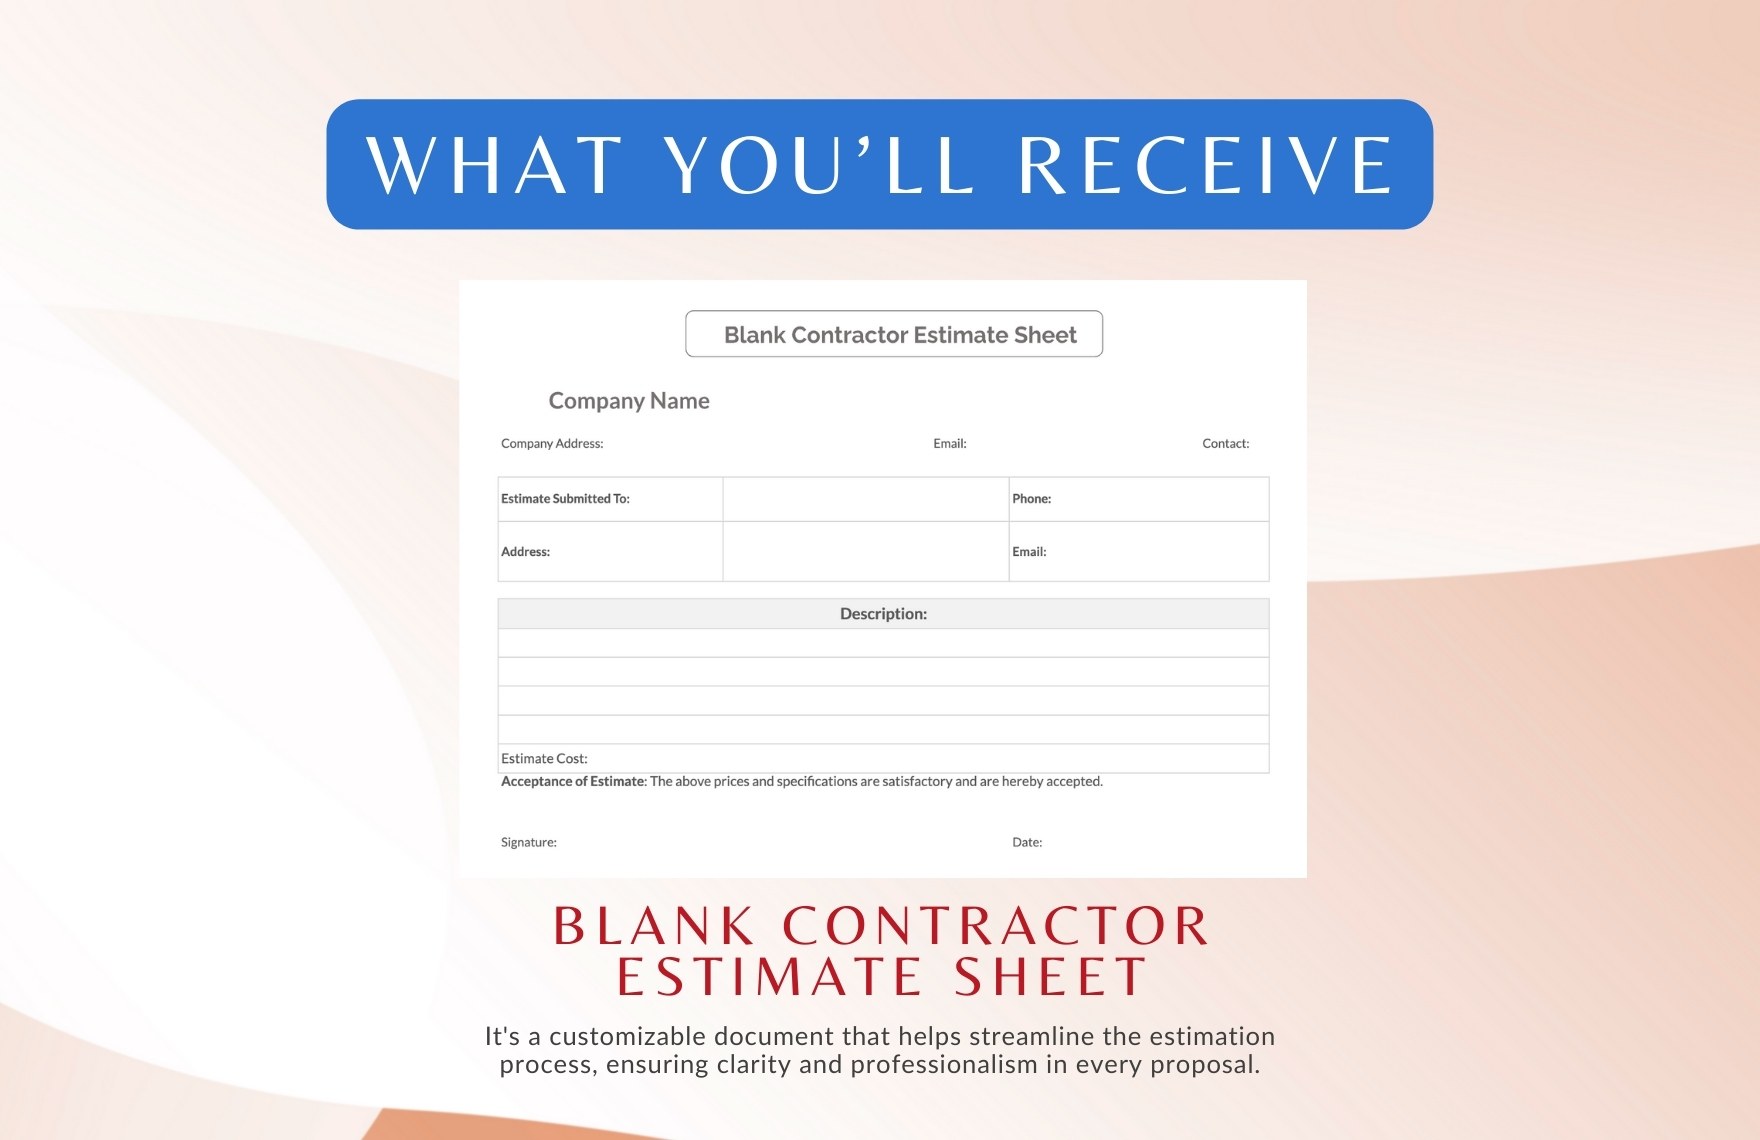 Blank Contractor Estimate Sheet Template